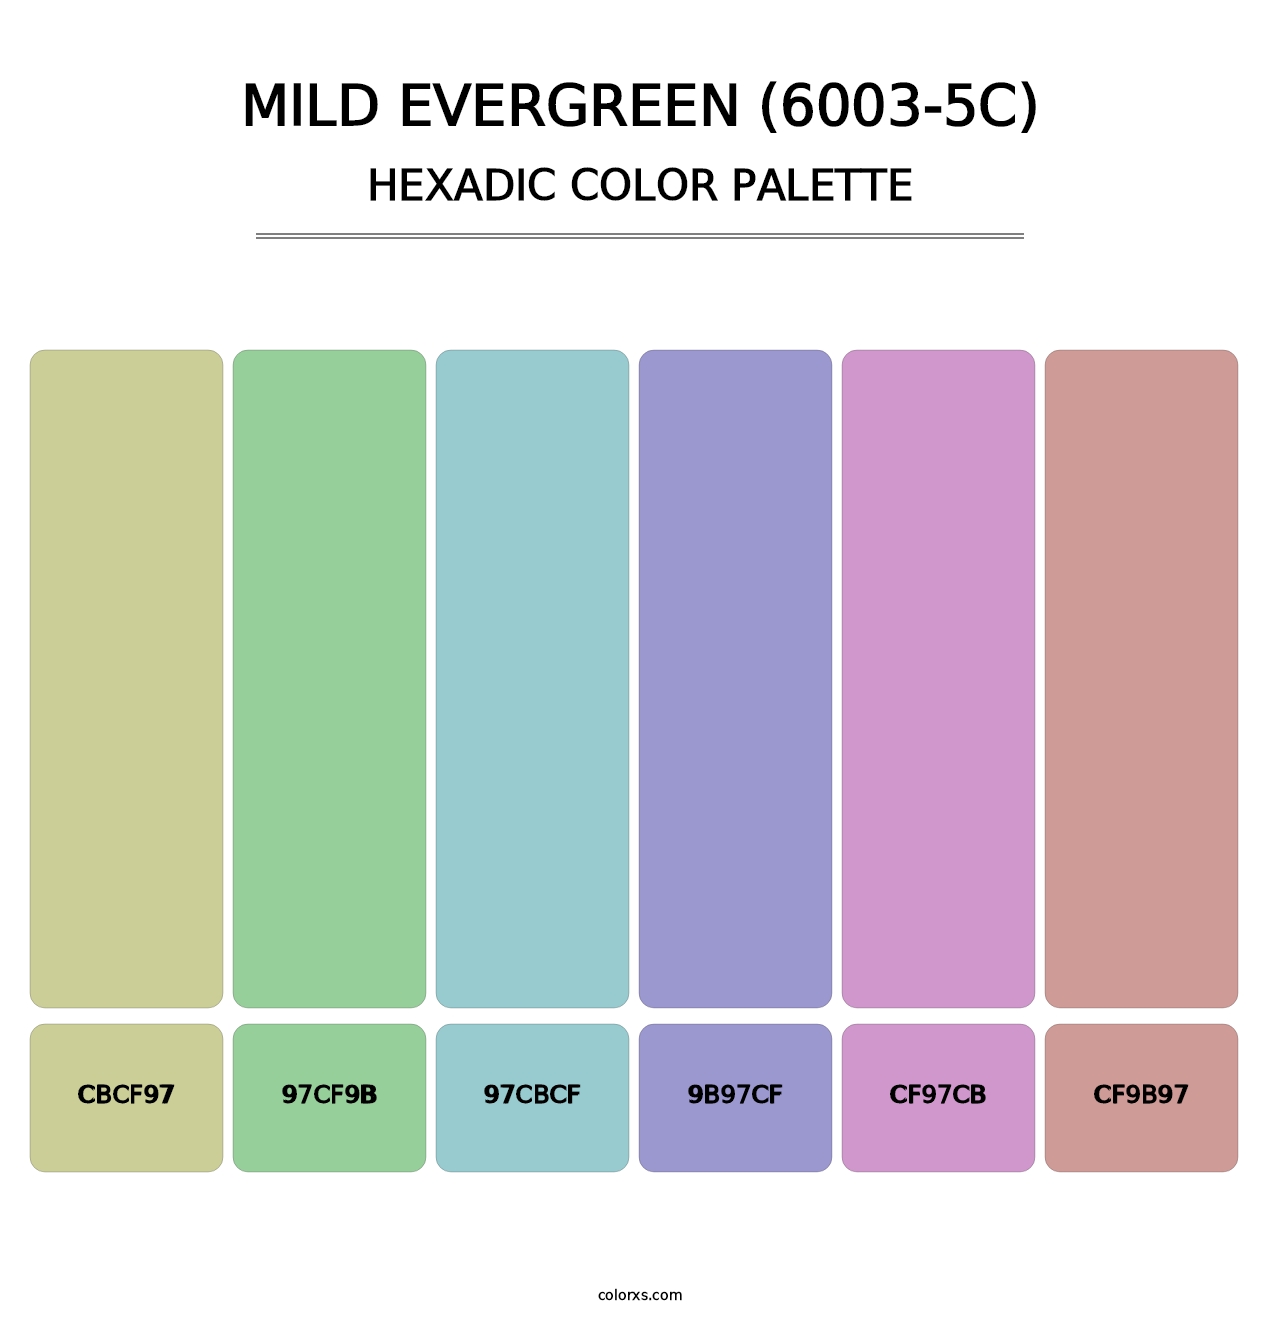 Mild Evergreen (6003-5C) - Hexadic Color Palette